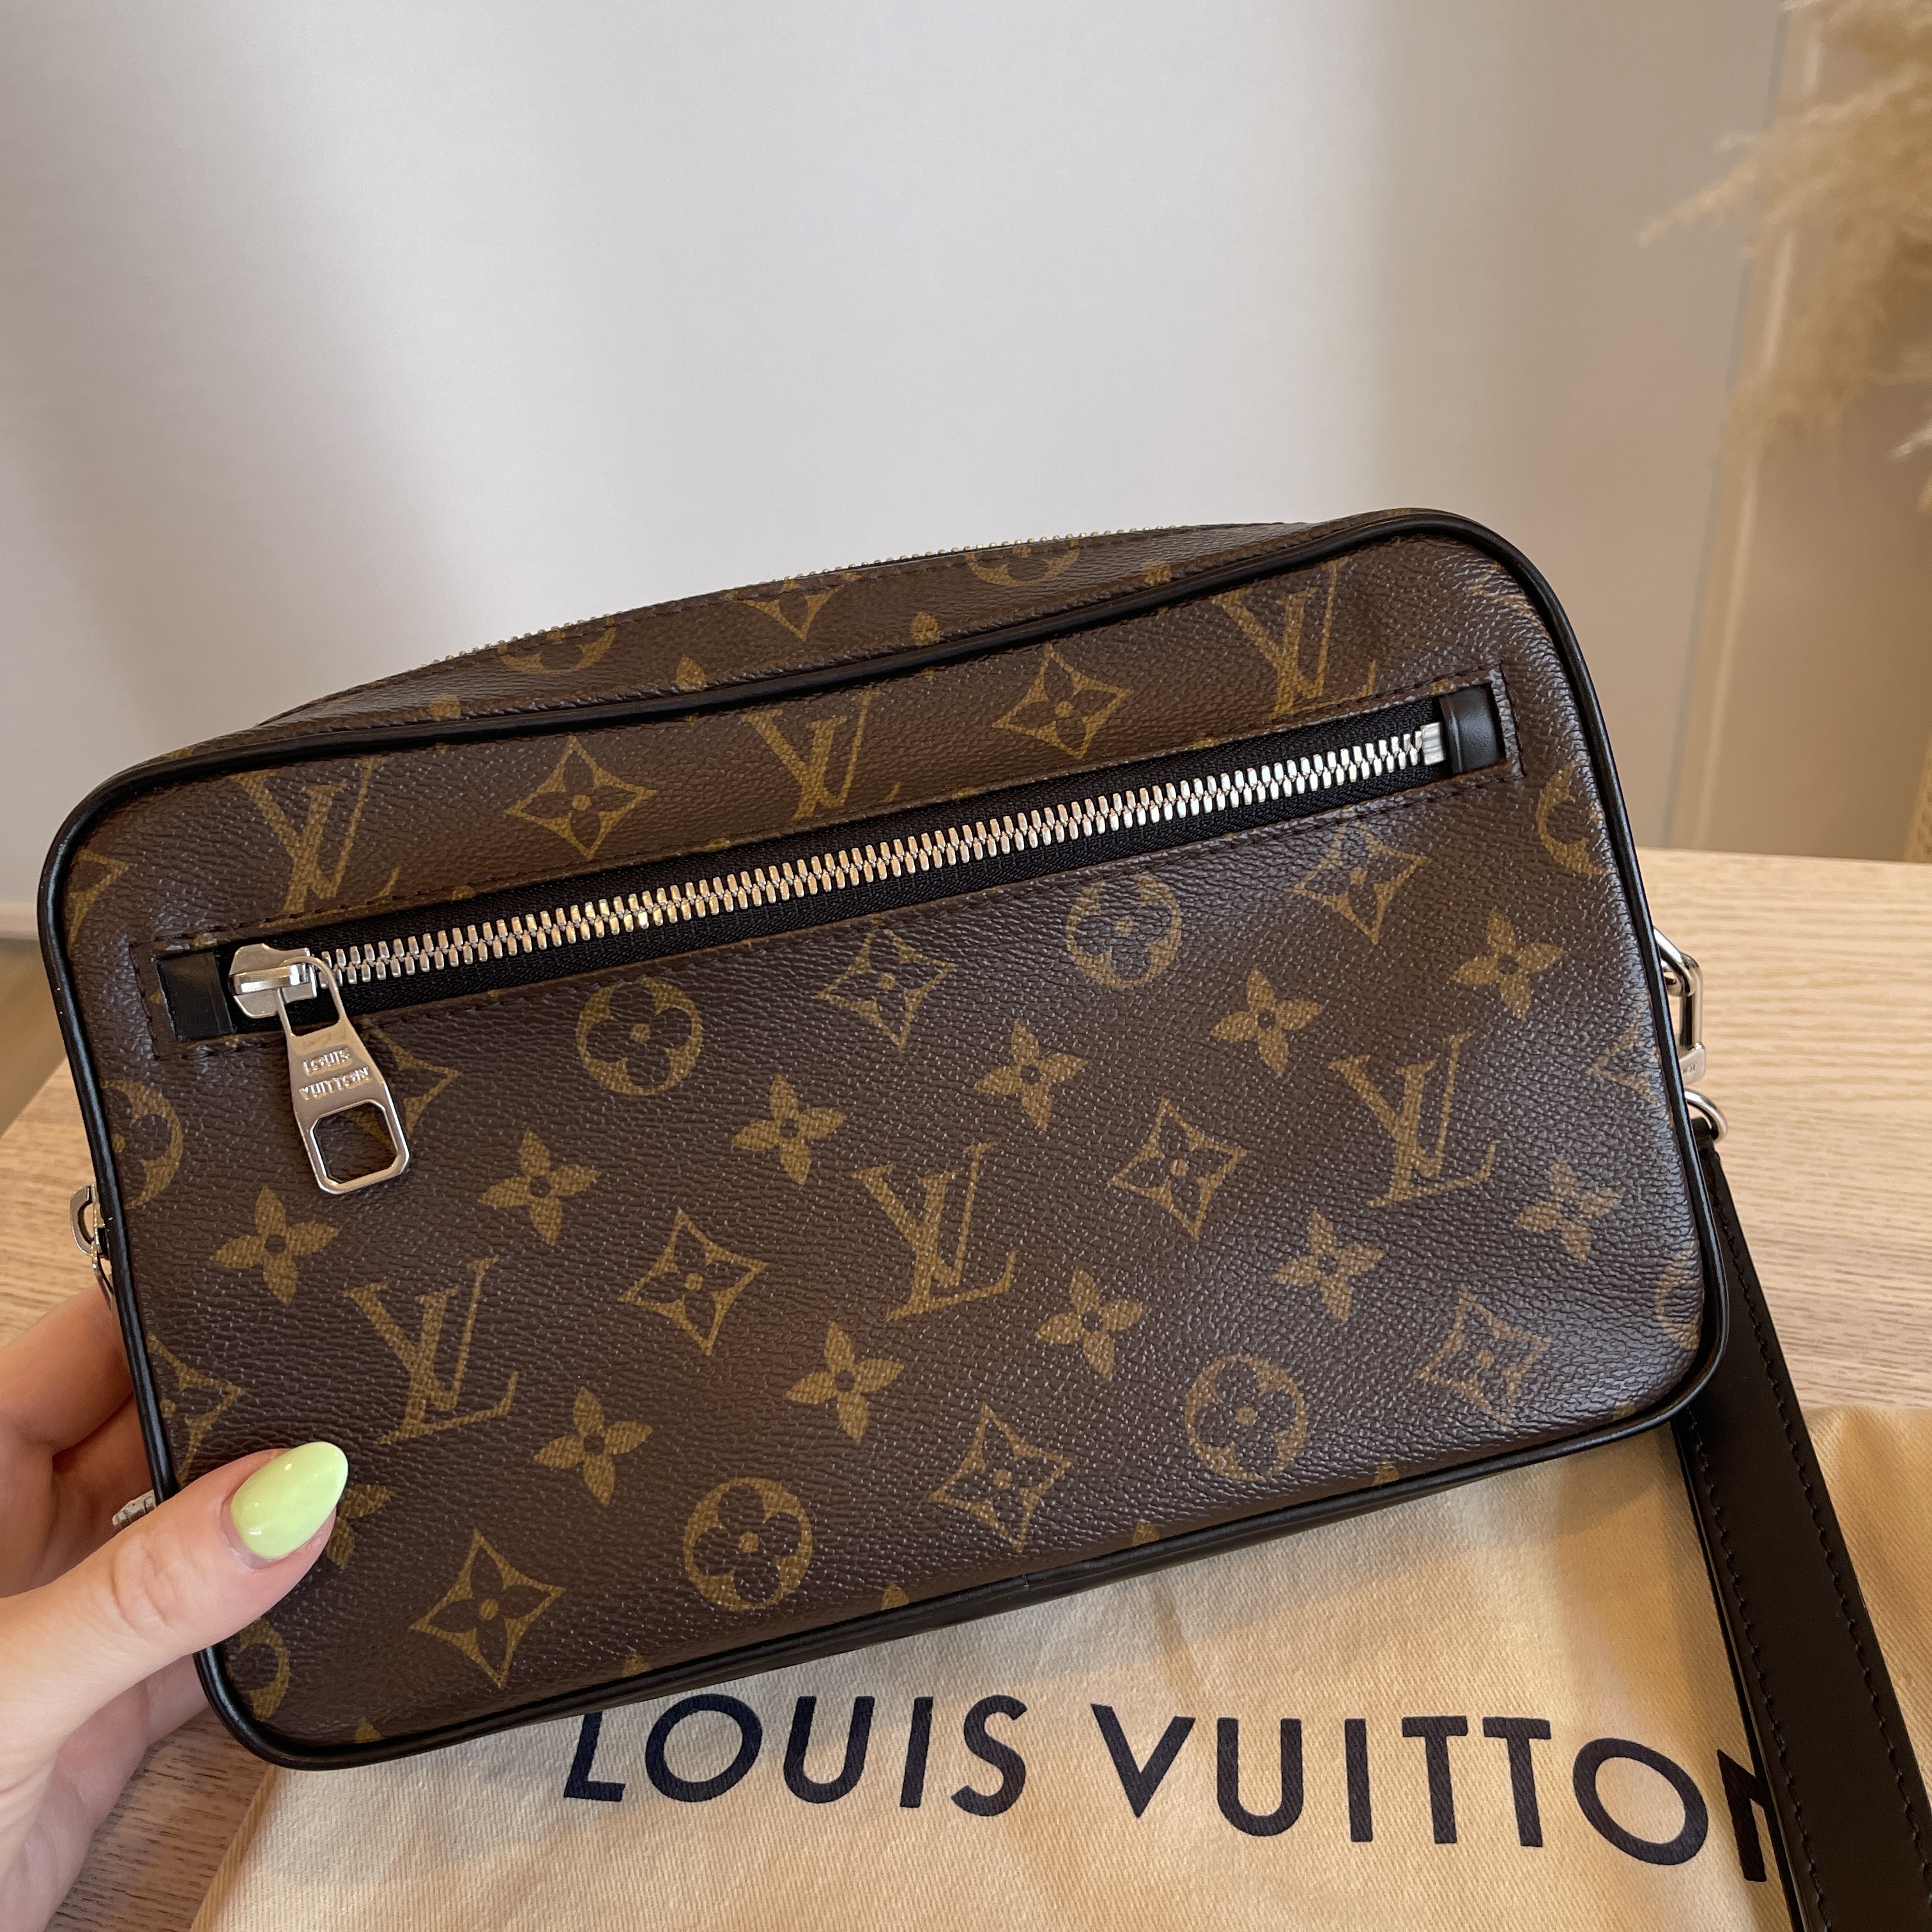 Brown 'LV' Leather Kasai Clutch Bag